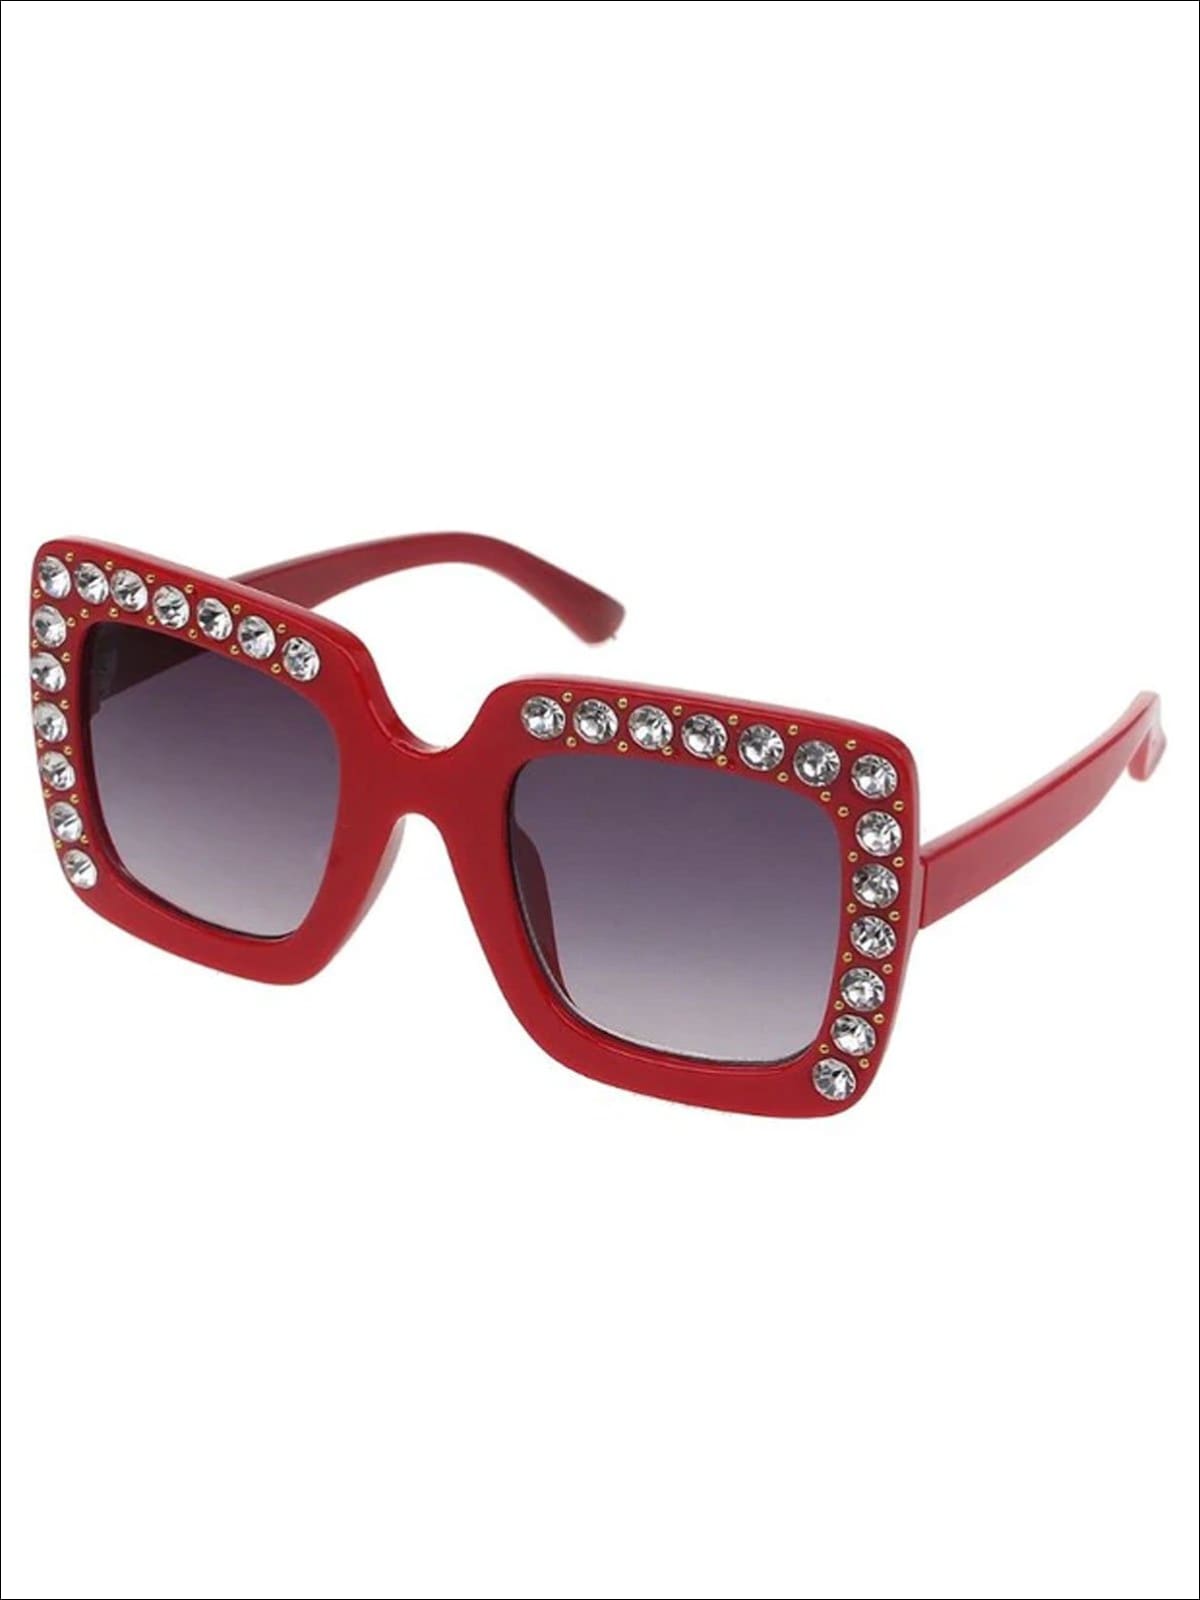 Girls Rhinestone Rimmed Sunglasses - Red - Girls Accessories